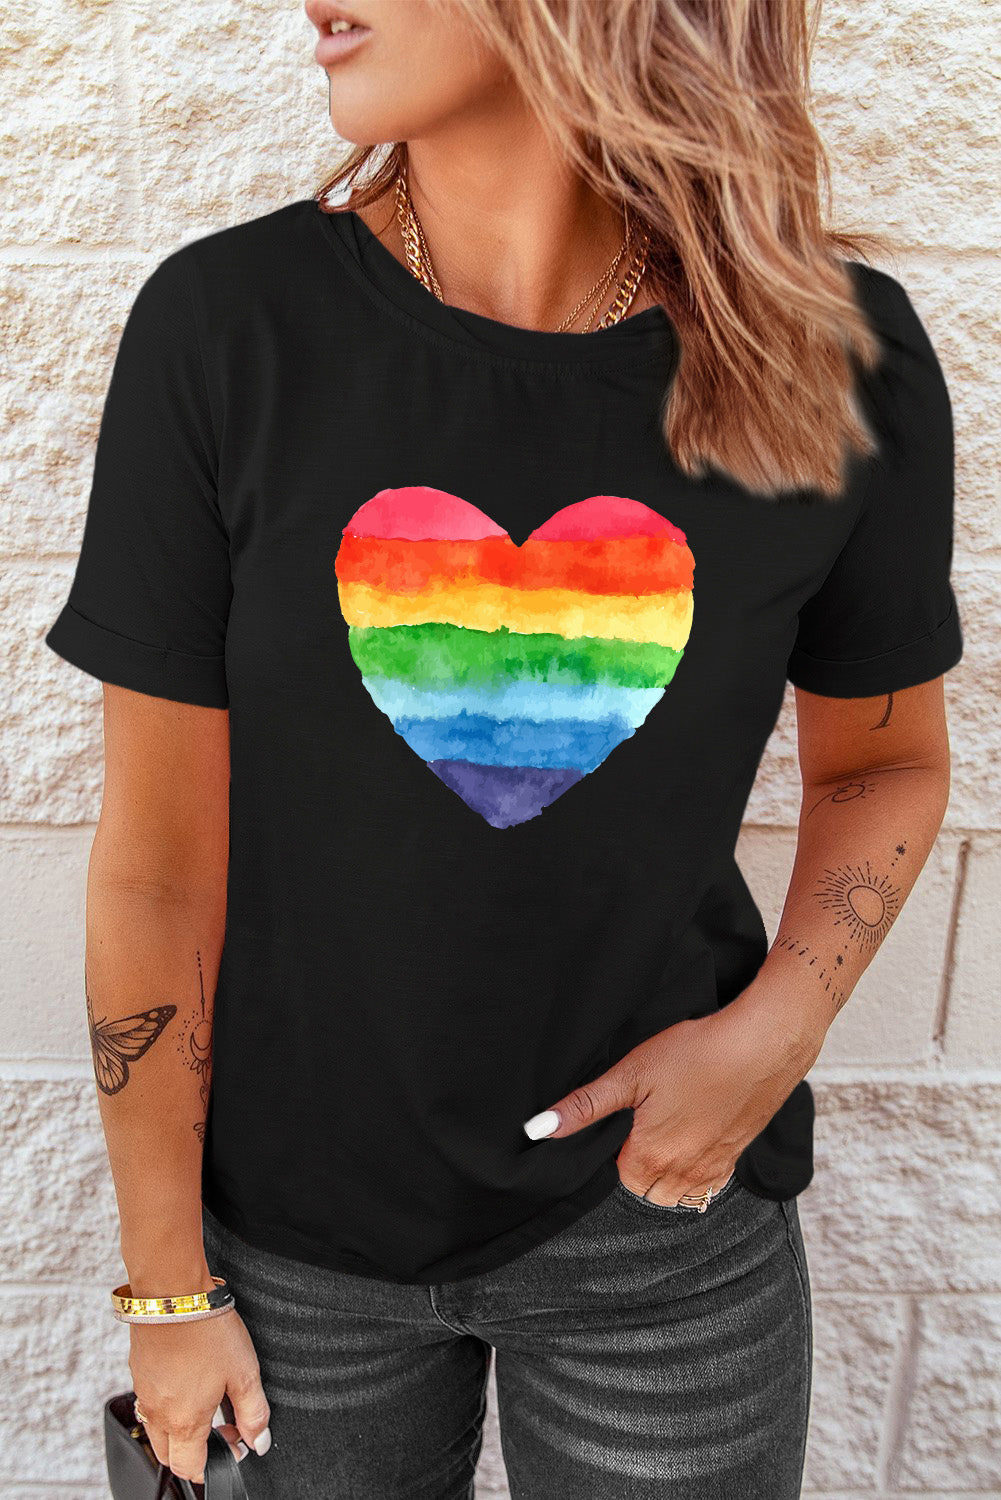 LC25216370-2-S, LC25216370-2-M, LC25216370-2-L, LC25216370-2-XL, LC25216370-2-2XL, Black Pride Shirt Women Rainbow Graphic Tshirts Rainbow Heart LGBTQ Print Tee Tops